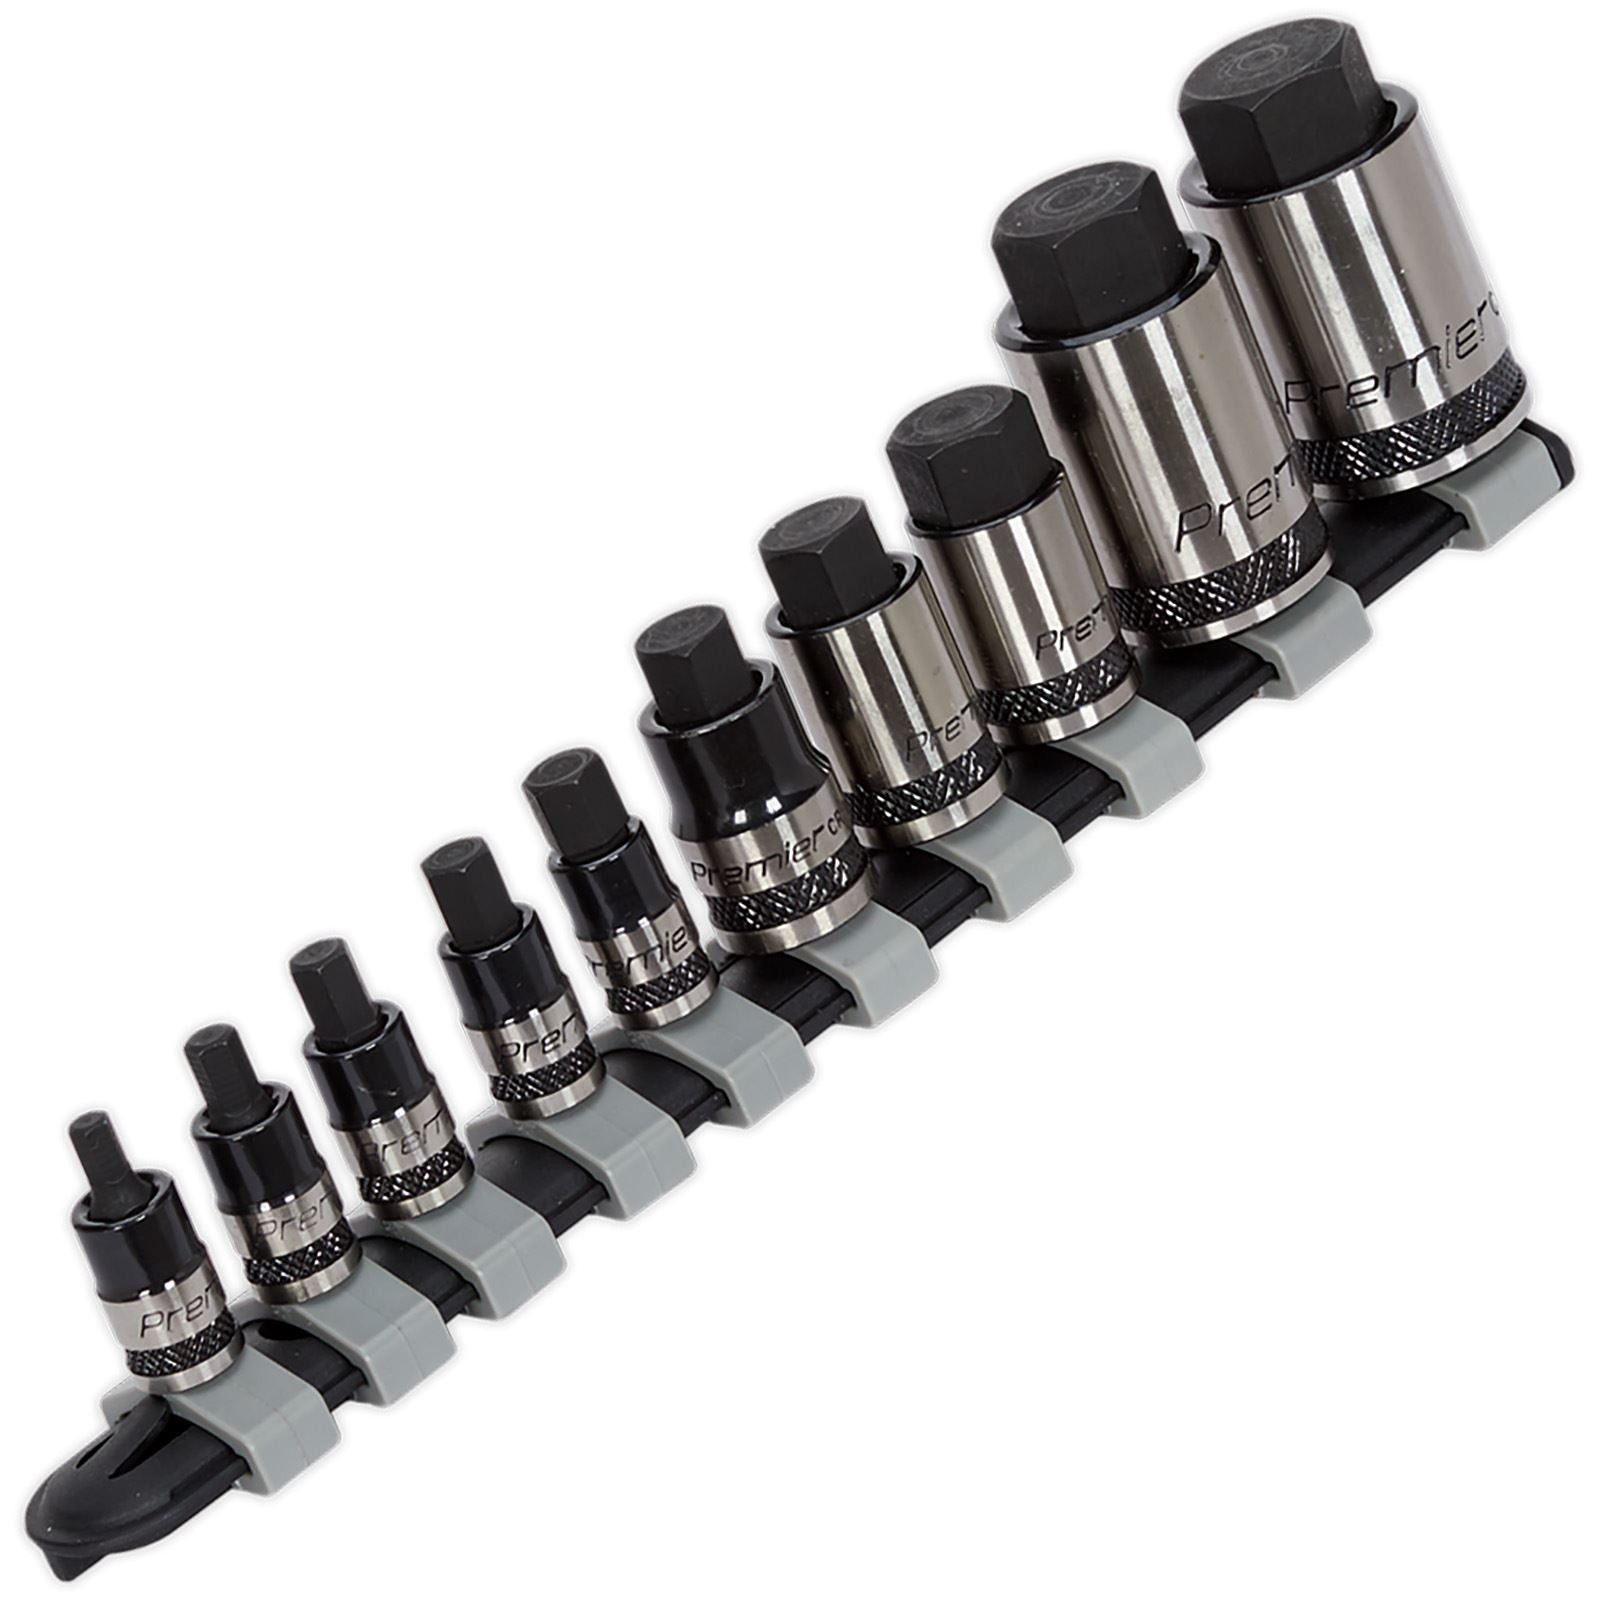 Sealey Premier Black 10 Piece 1/4" 3/8" 1/2" Drive Stubby Hex Socket Bit Set 4-19mm